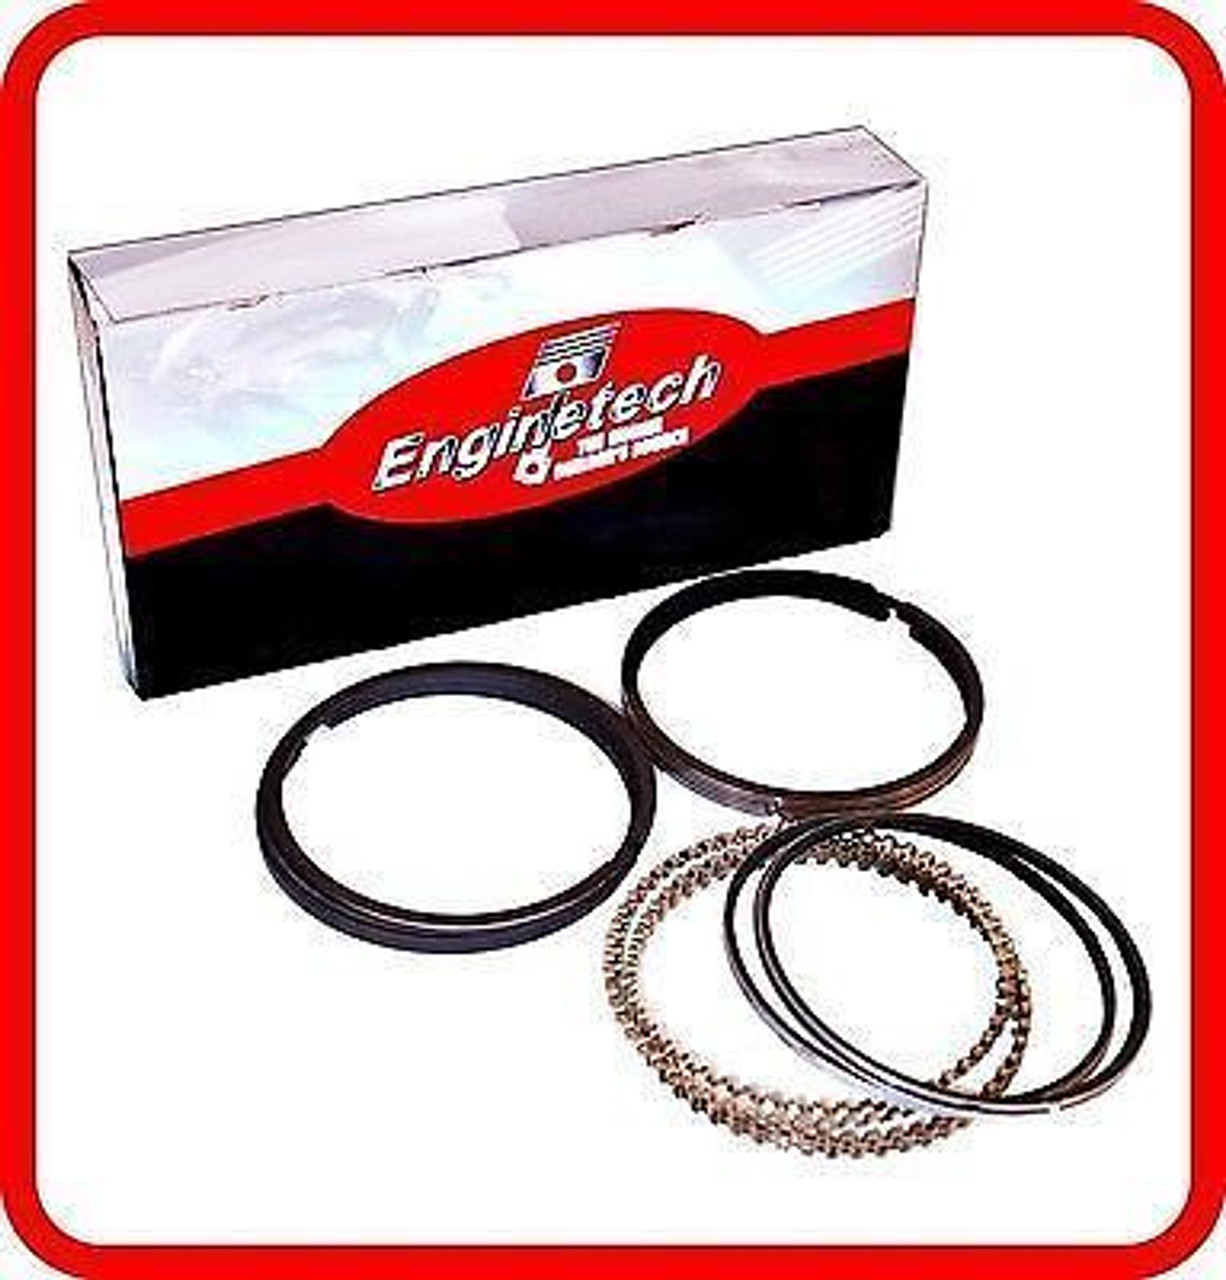 Engine Piston Ring Set - Kit Part - S99504